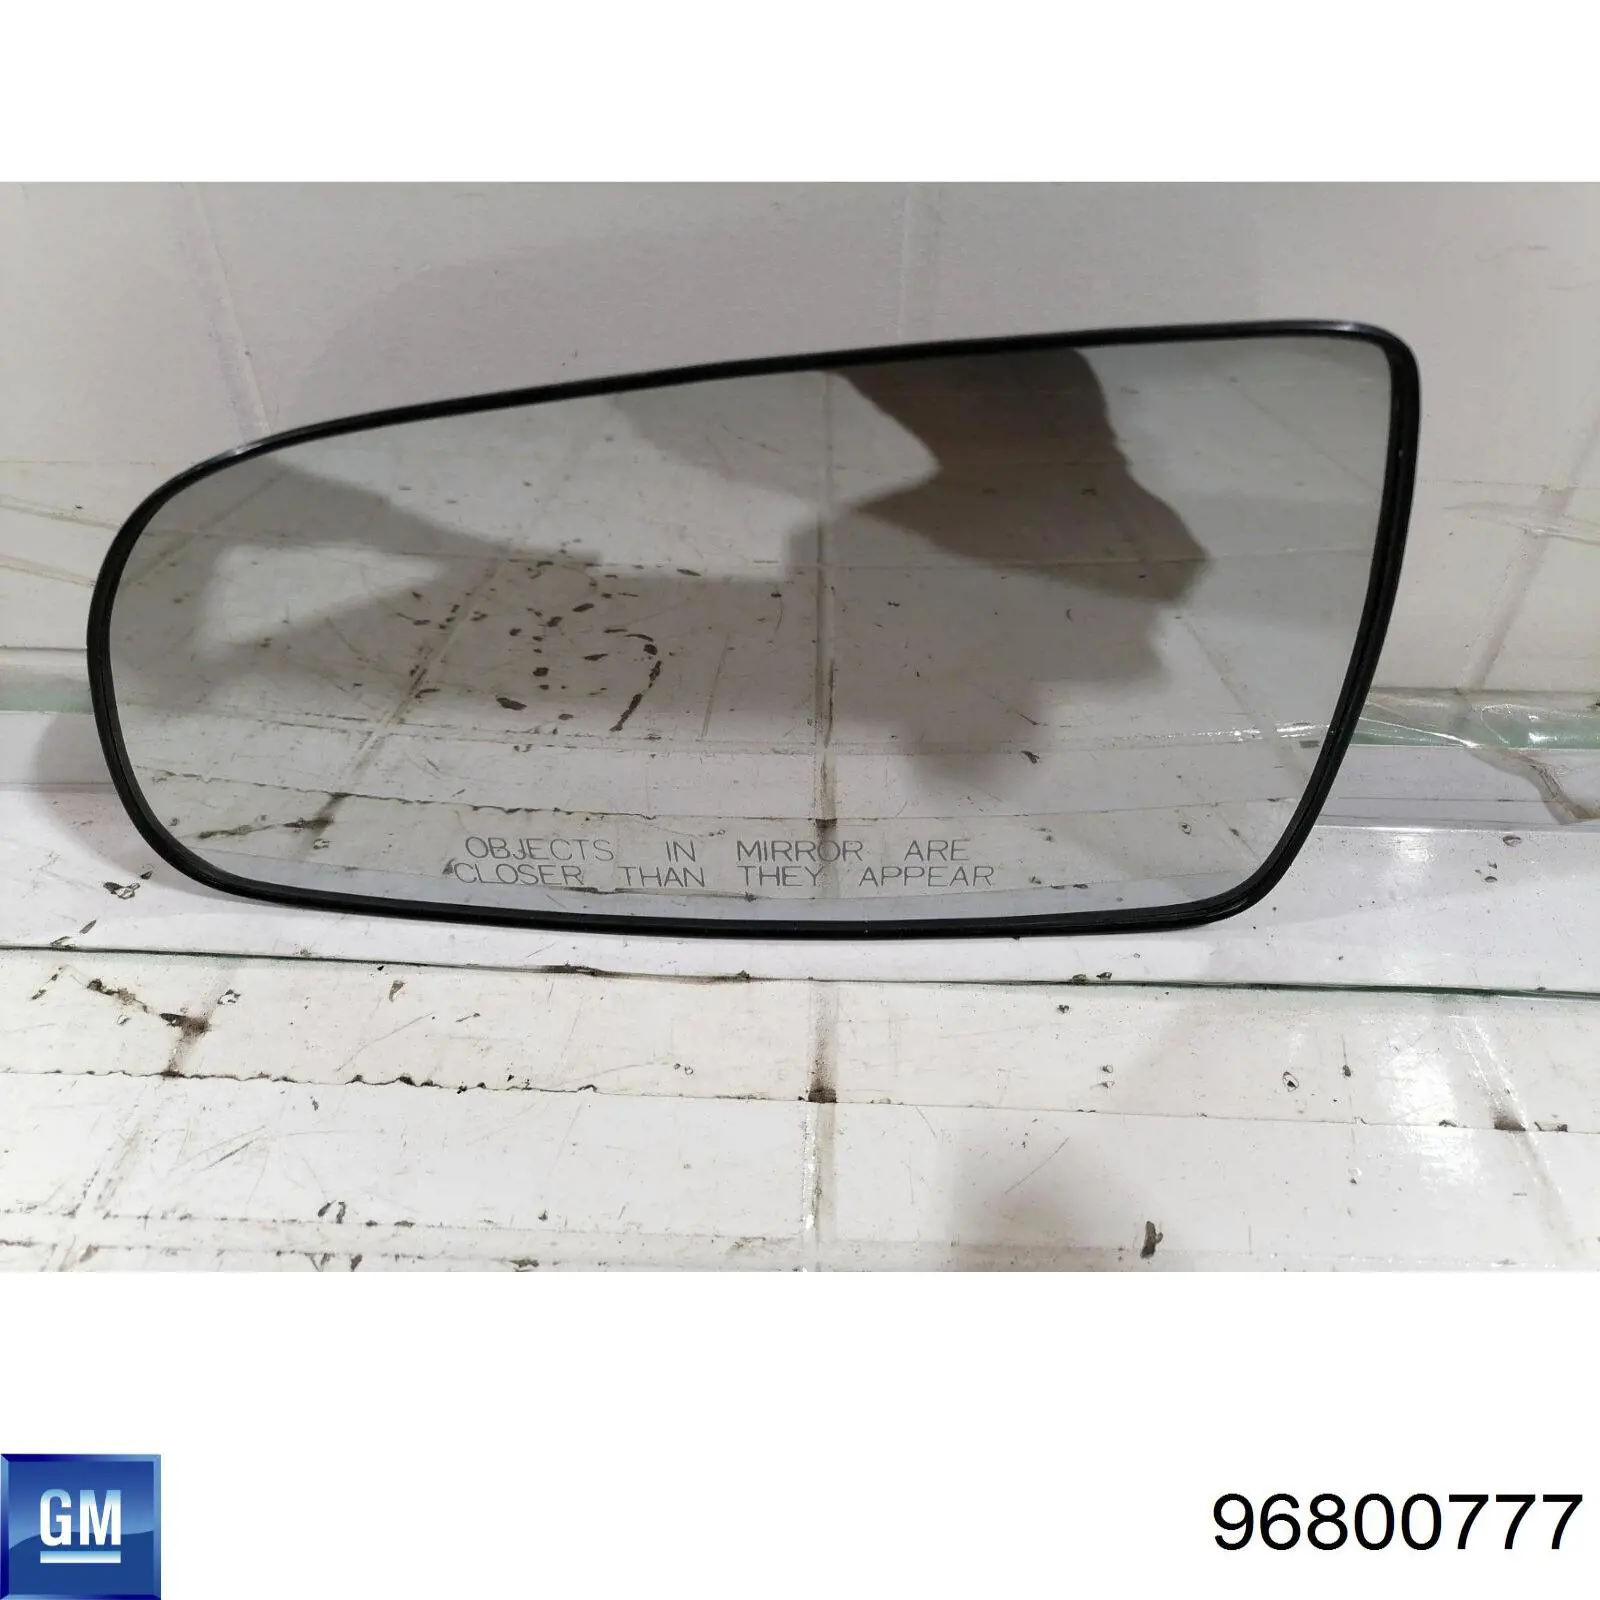 96800777 Opel cristal de espejo retrovisor exterior izquierdo